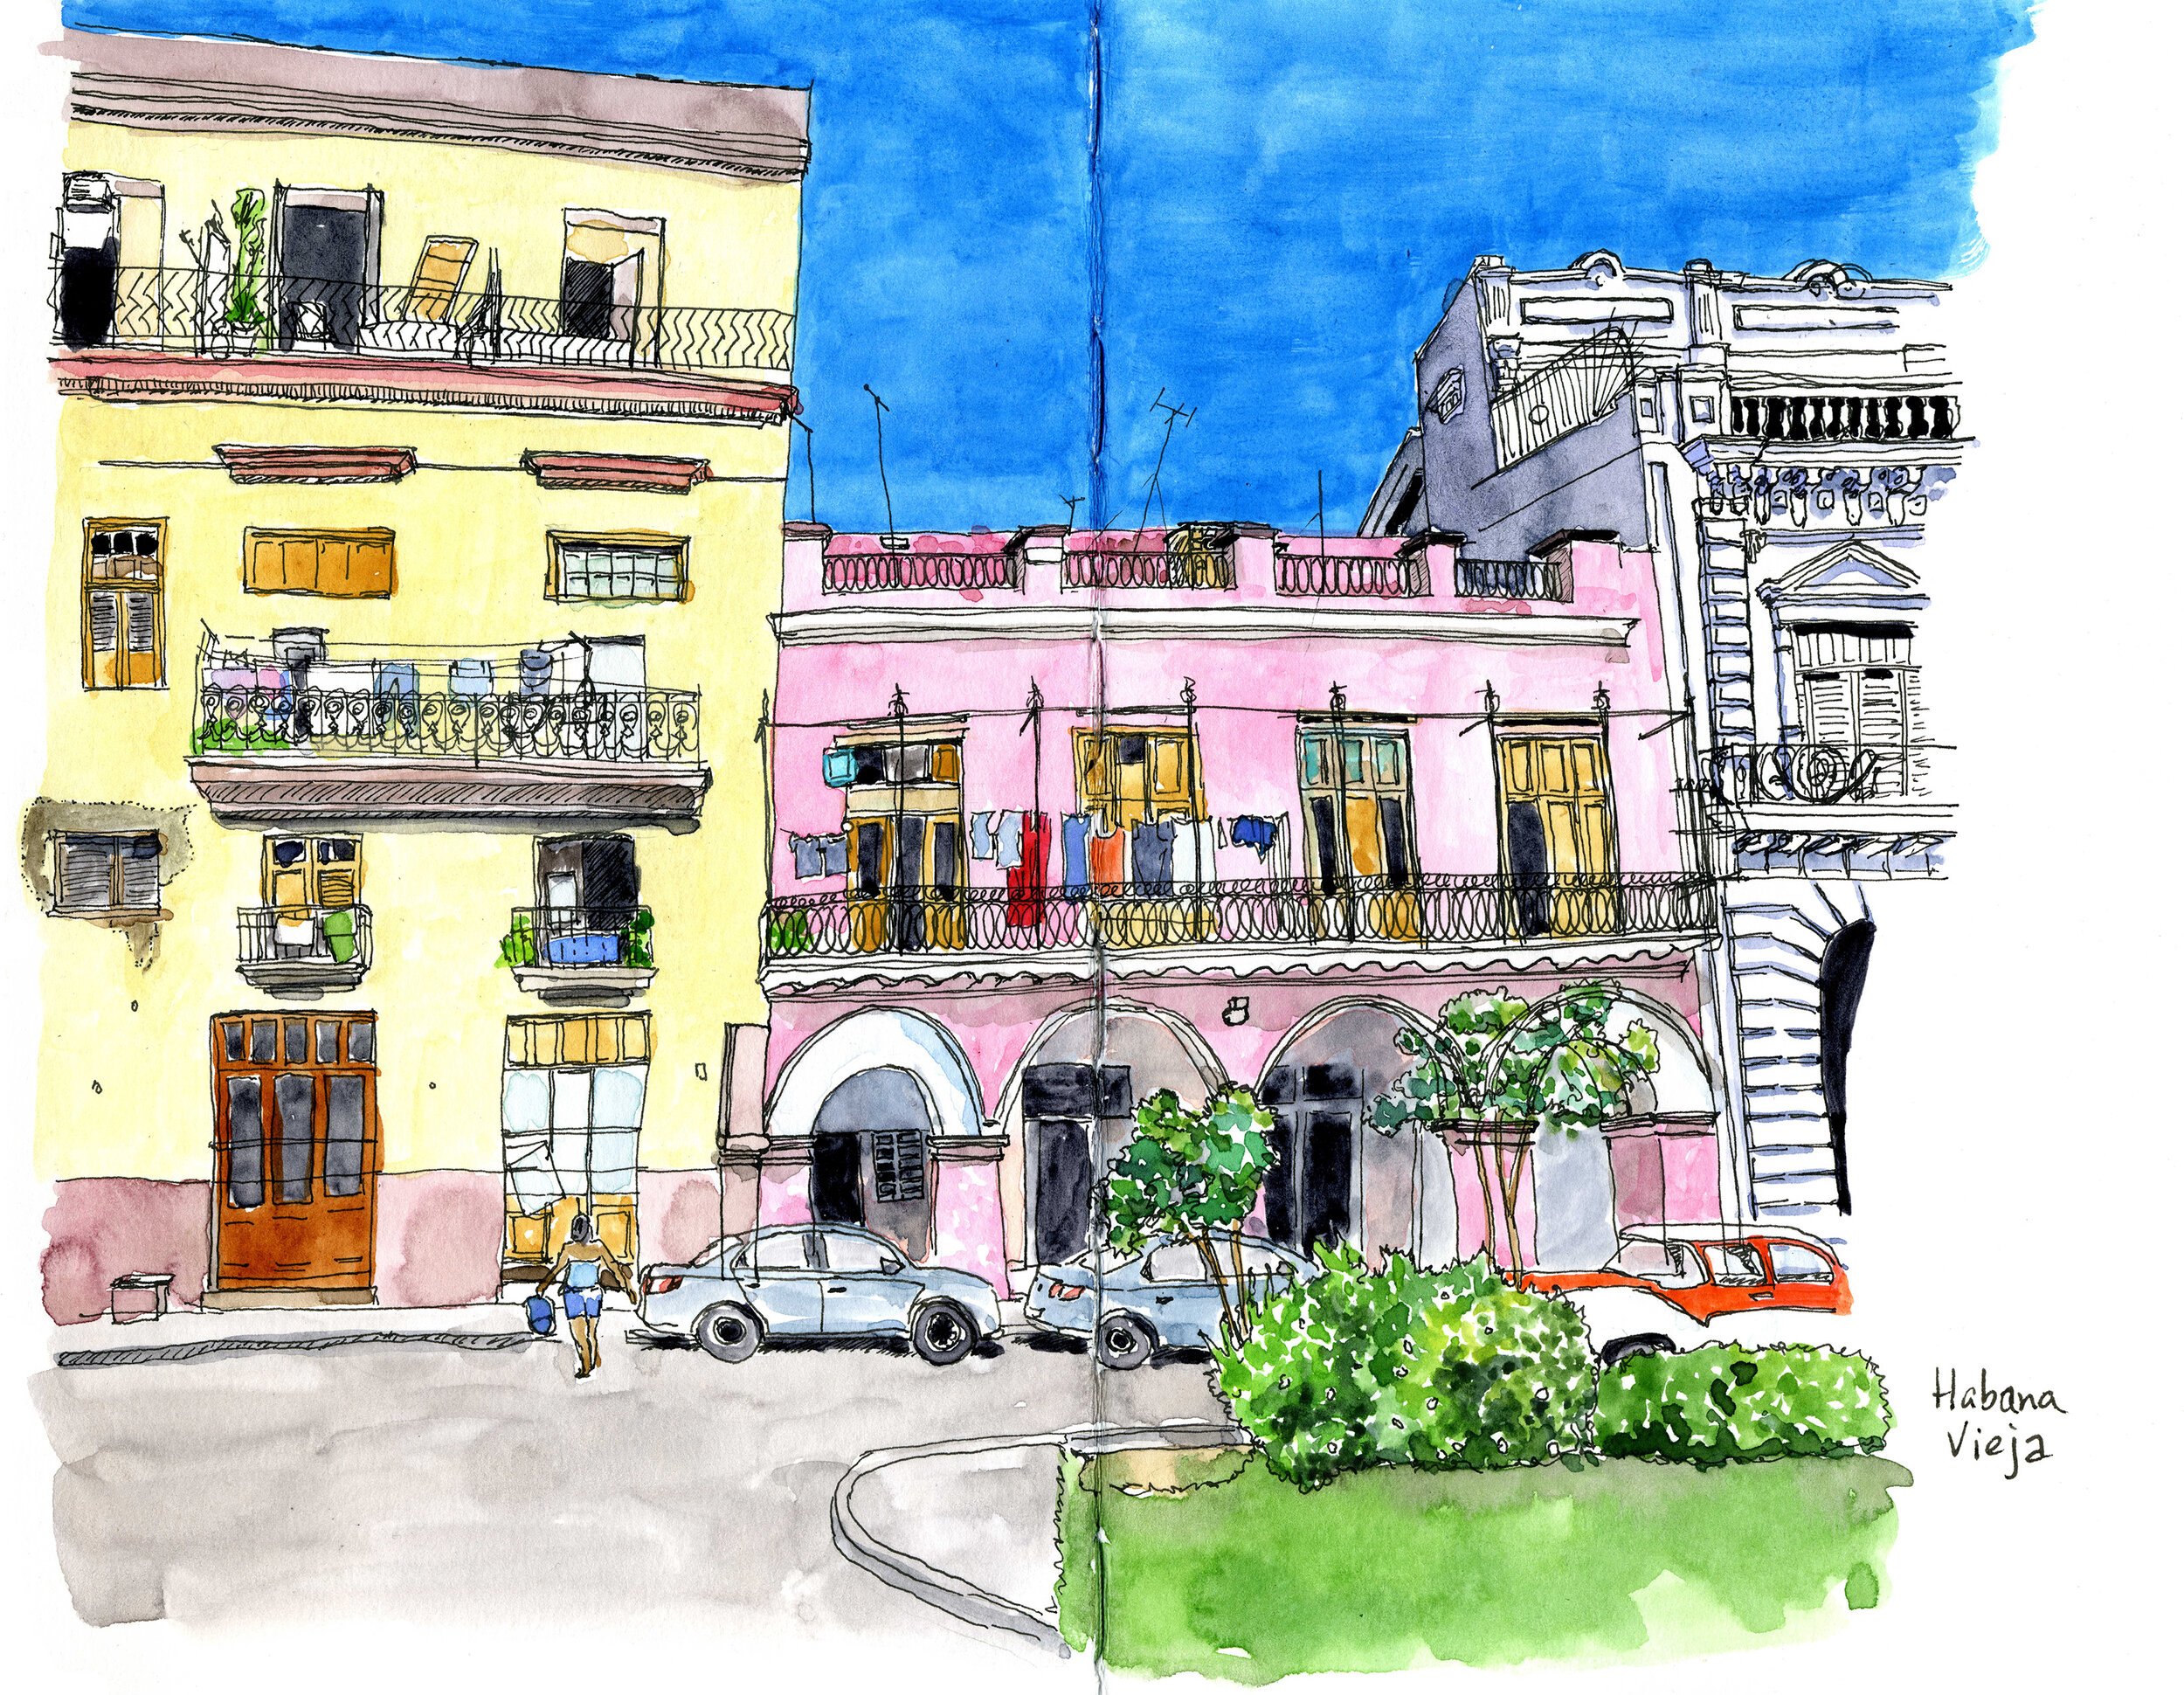 Three Buildings on a Street, Habana Vieja, Cuba